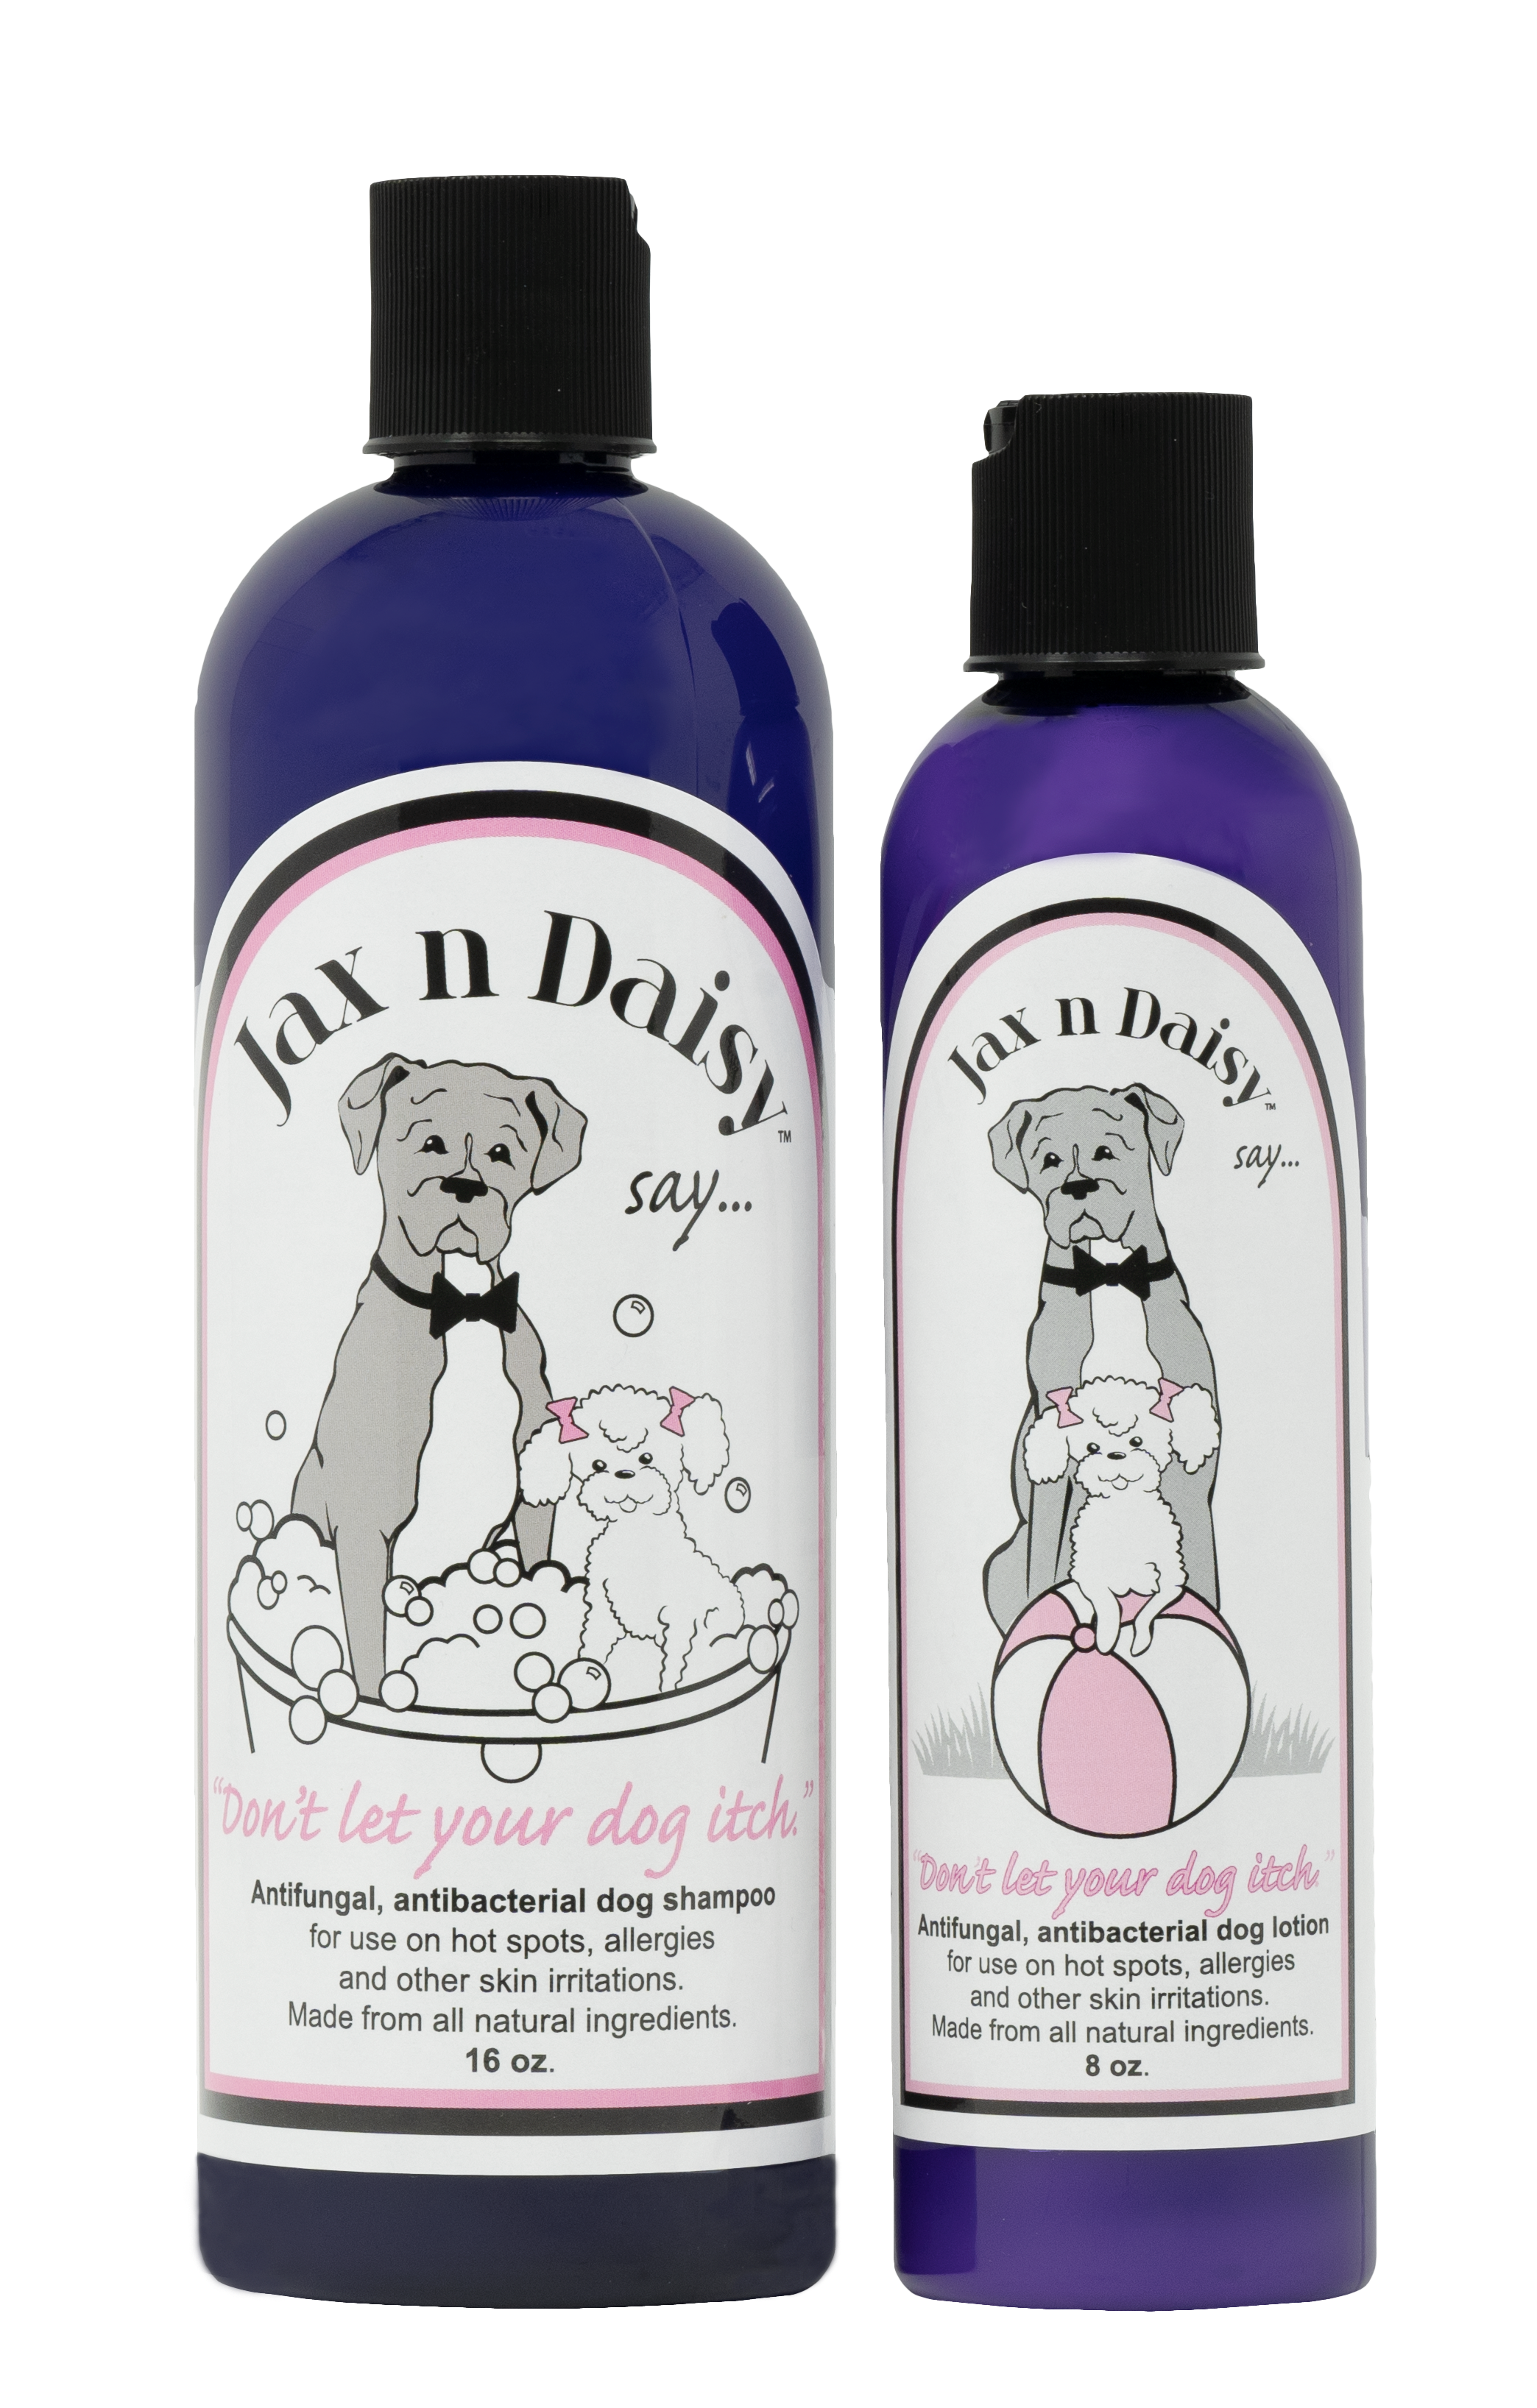 jax n daisy dog shampoo